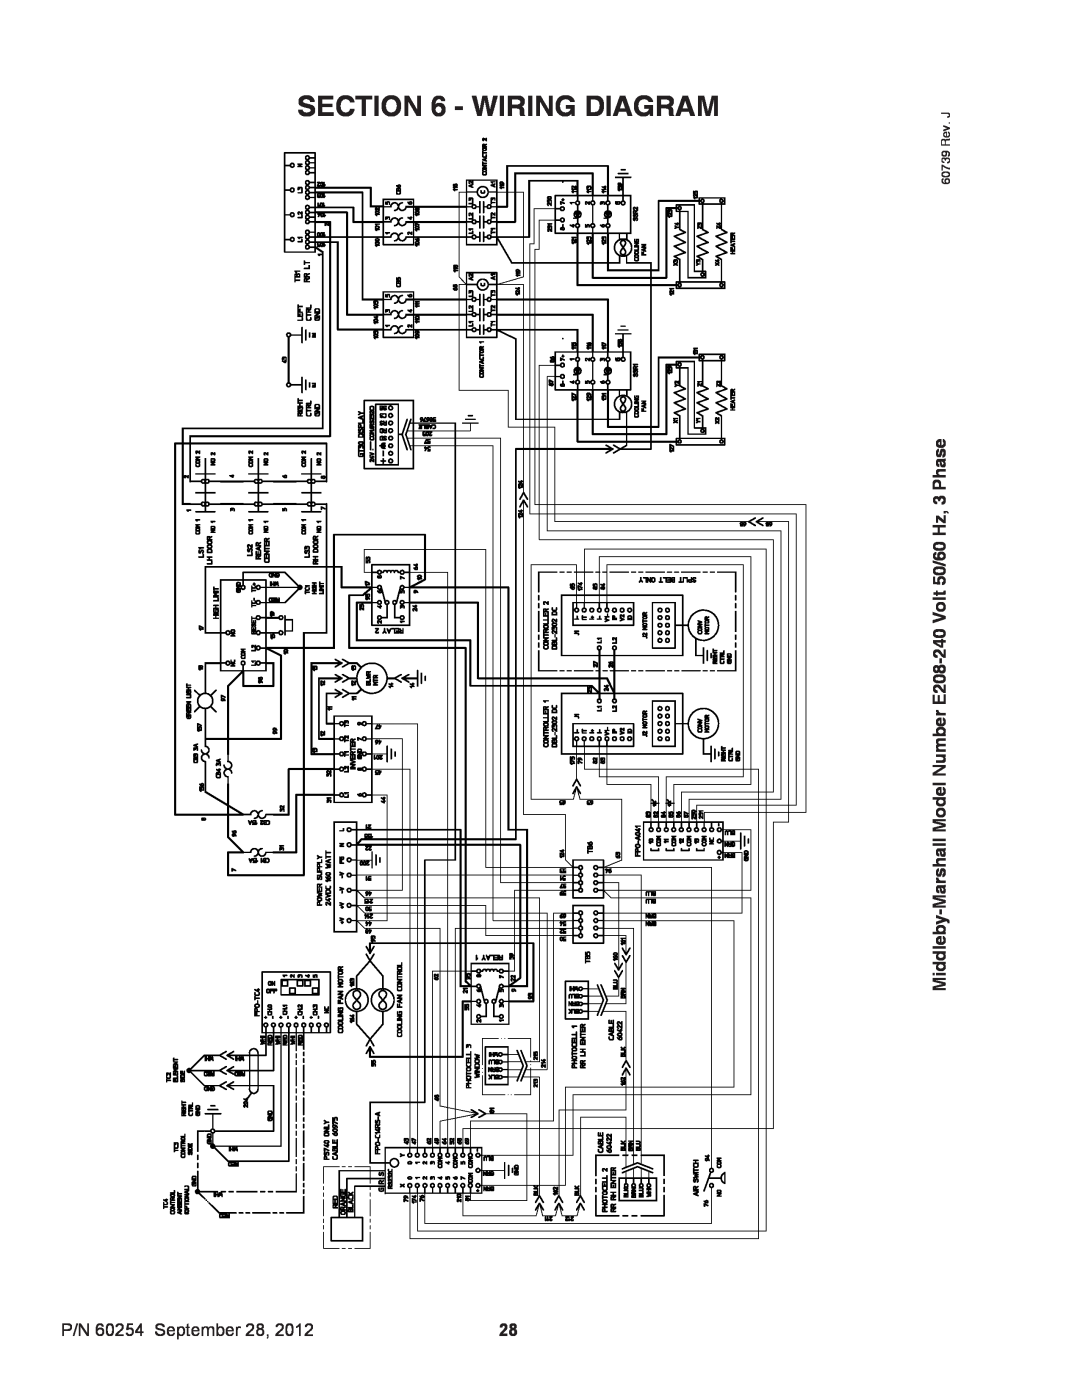 Middleby Marshall installation manual Wiring Diagram, P/N 60254 September 28, 60739 Rev. J 